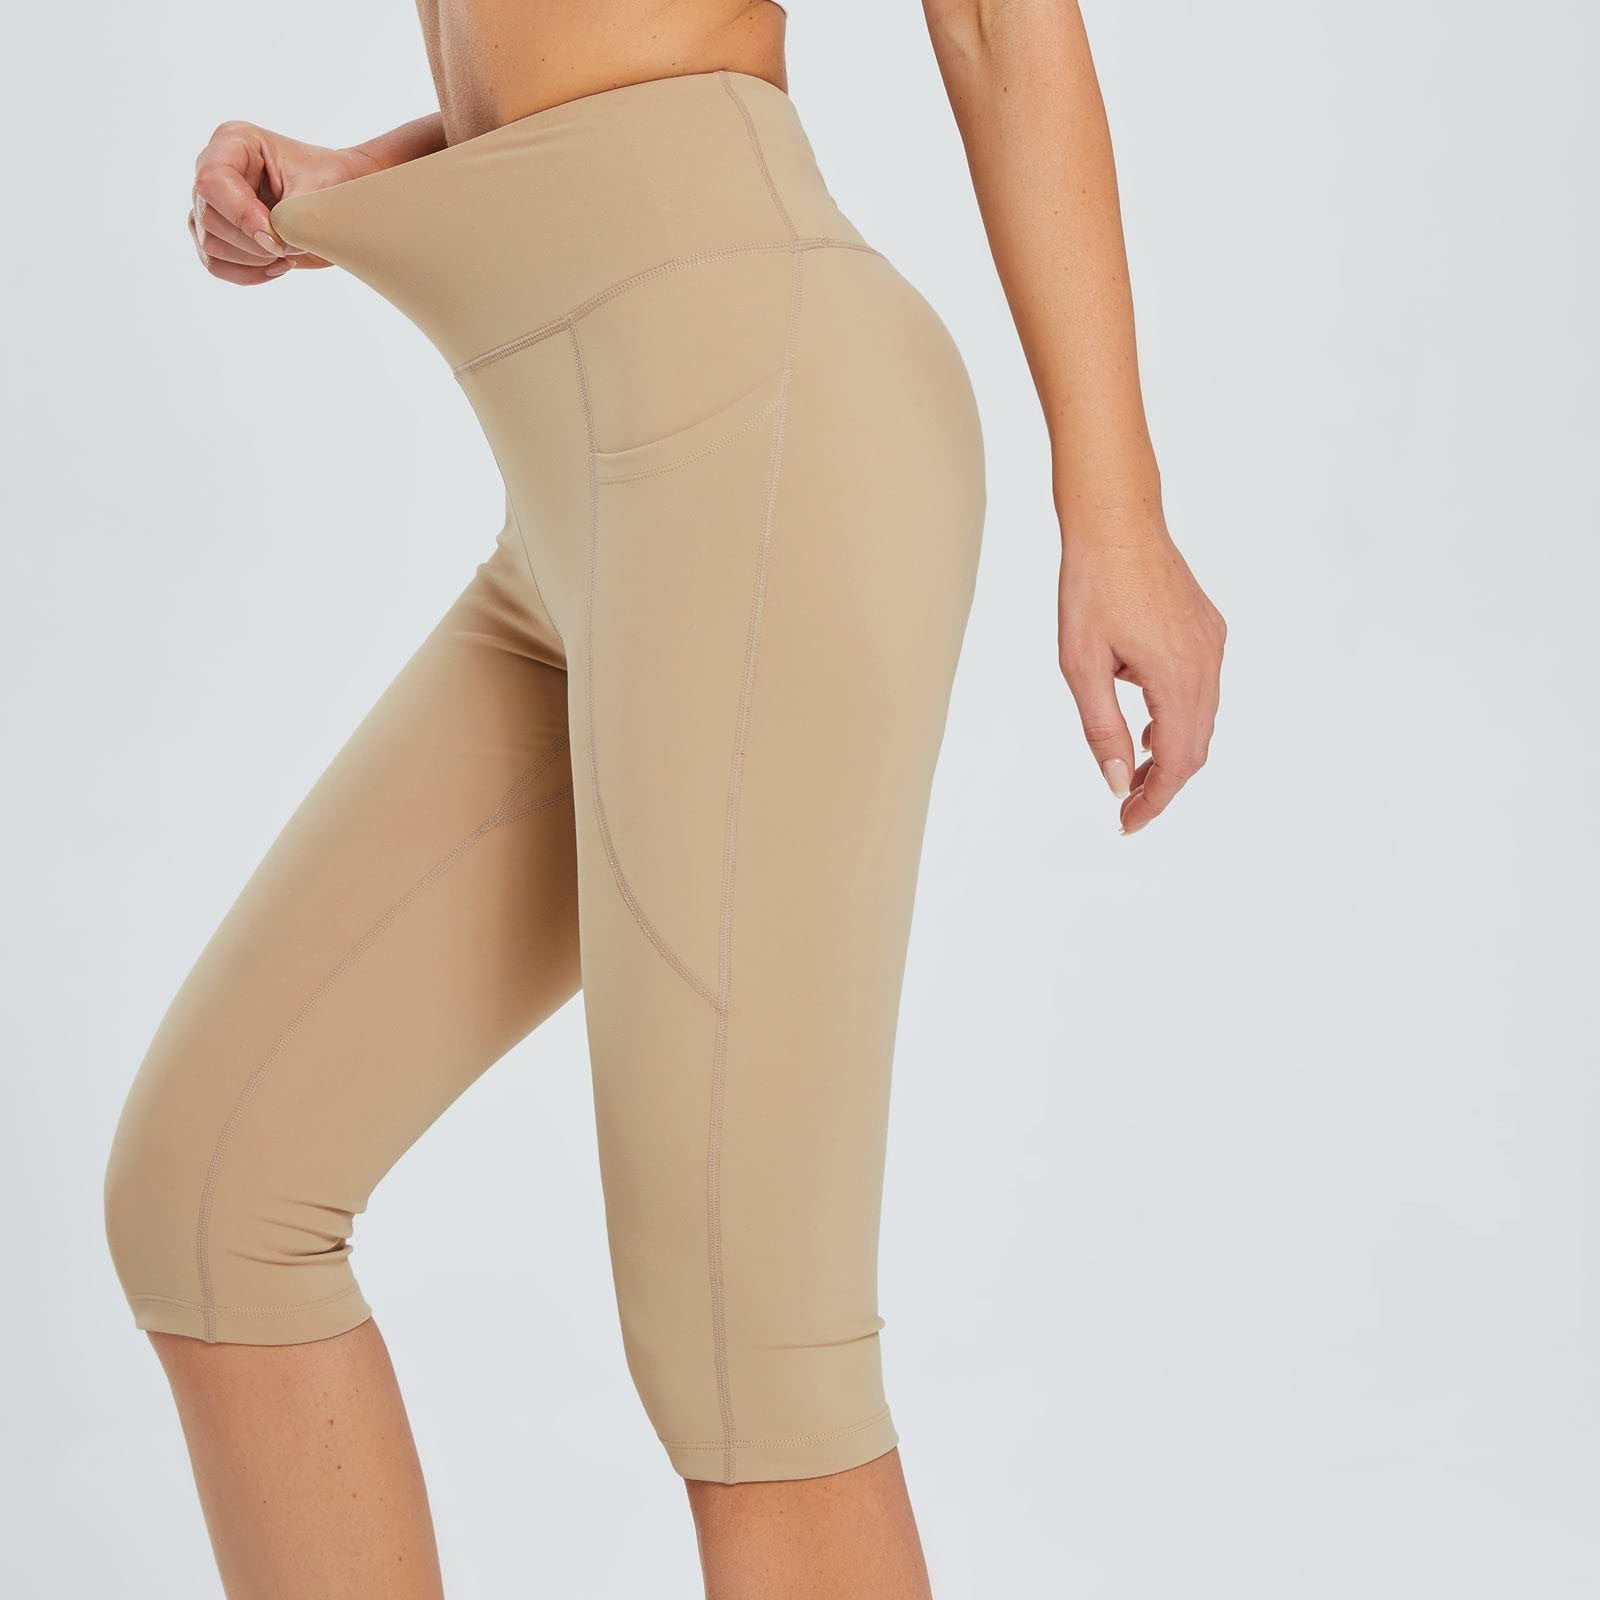 women's capri leggings-Comfy & Stylish Capri Leggings-DoYou4Less